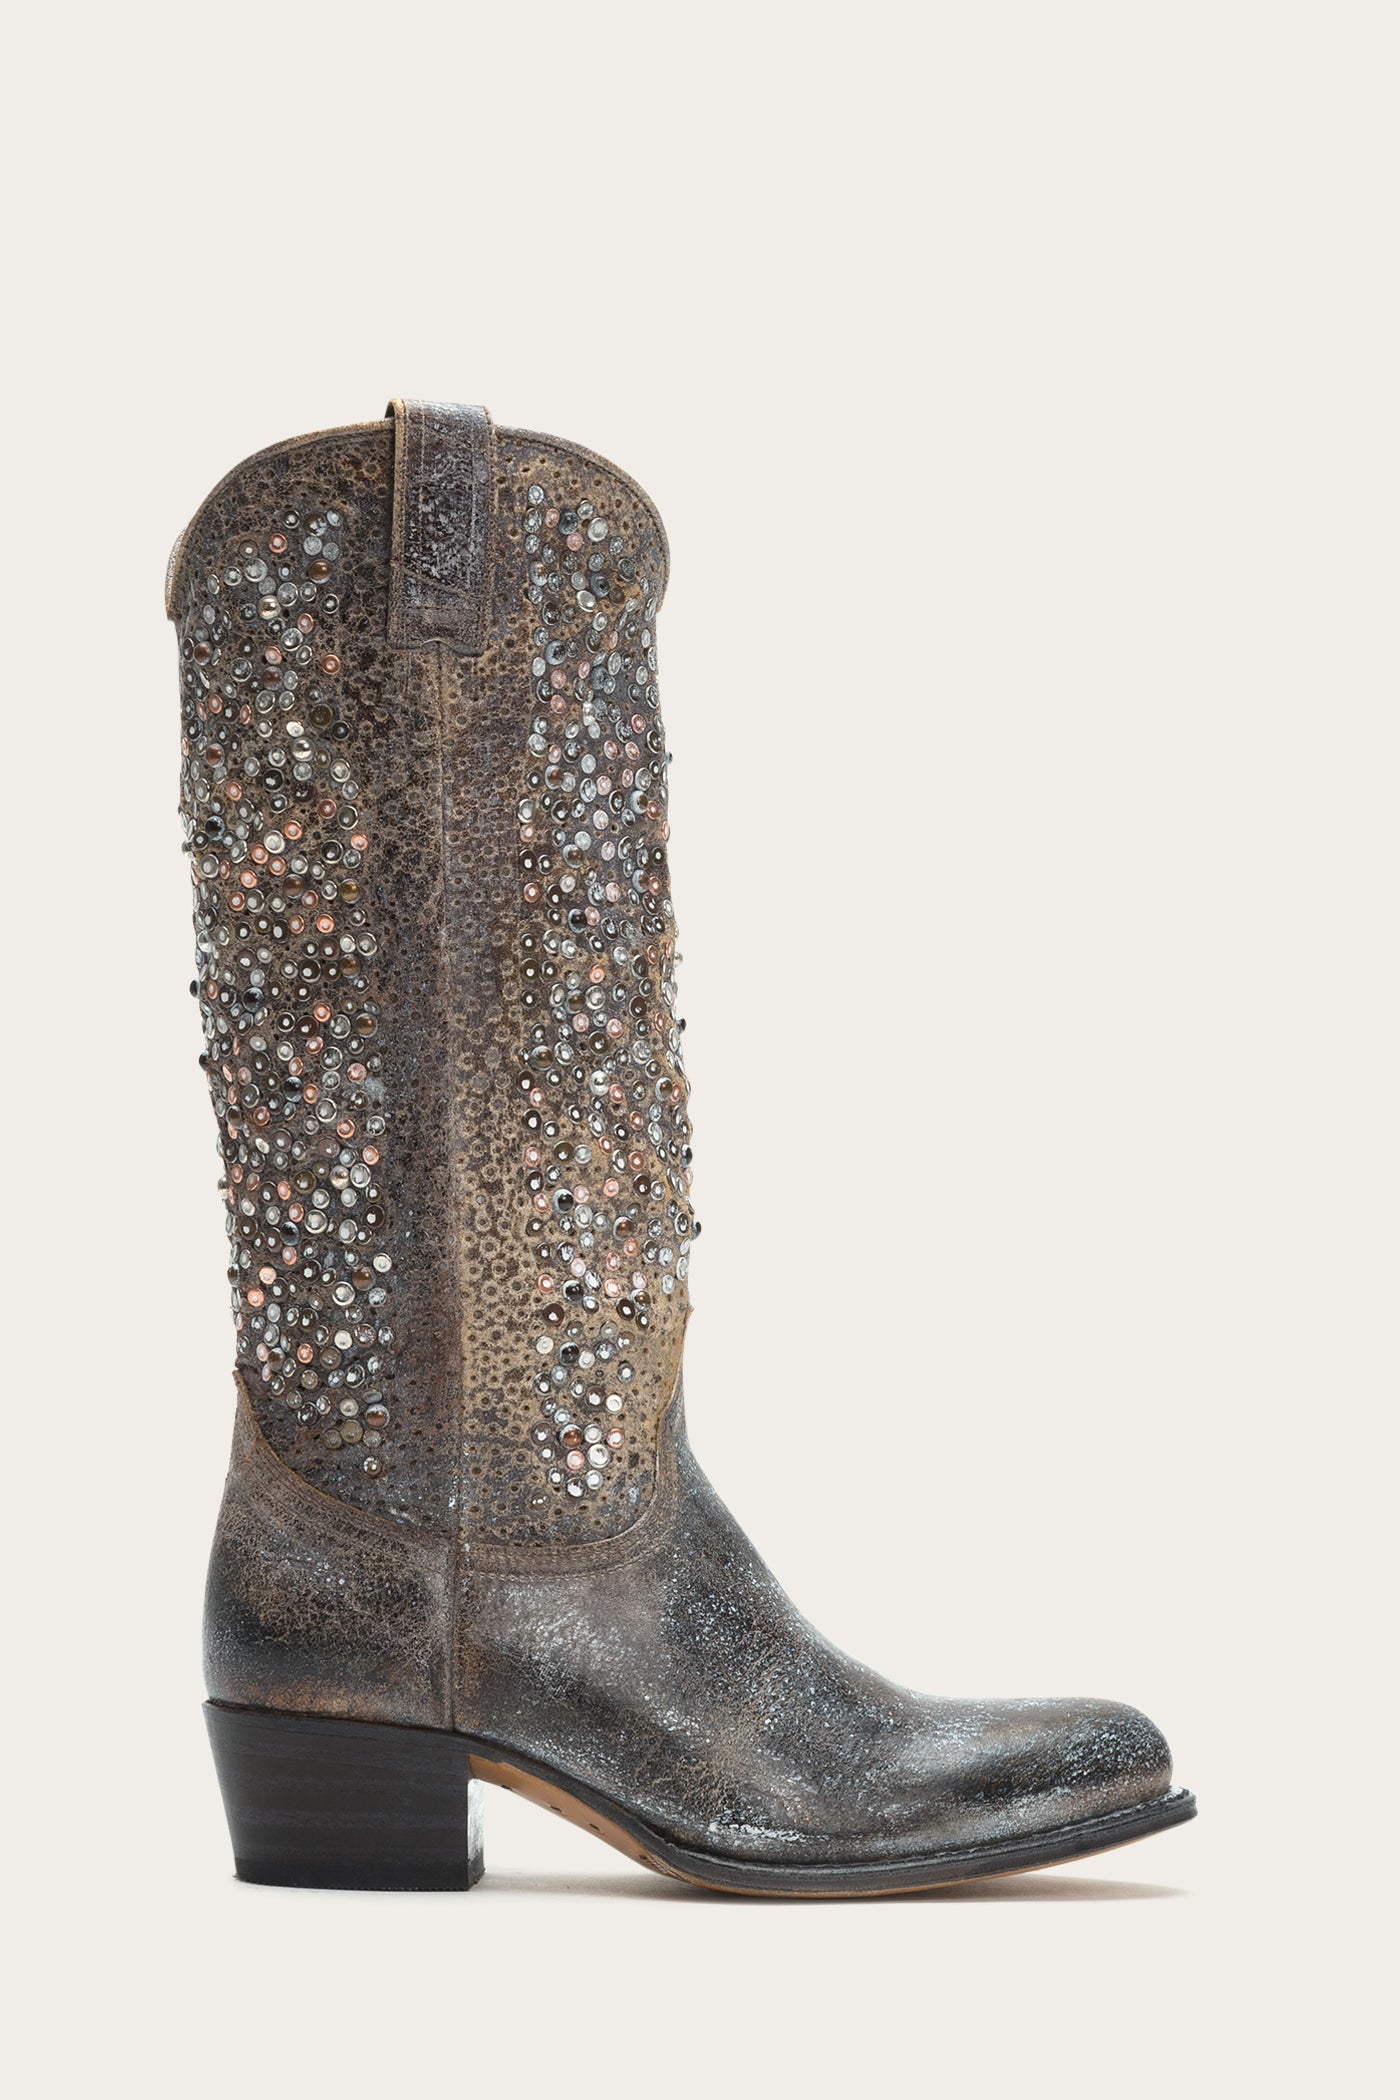 frye studded cowboy boots